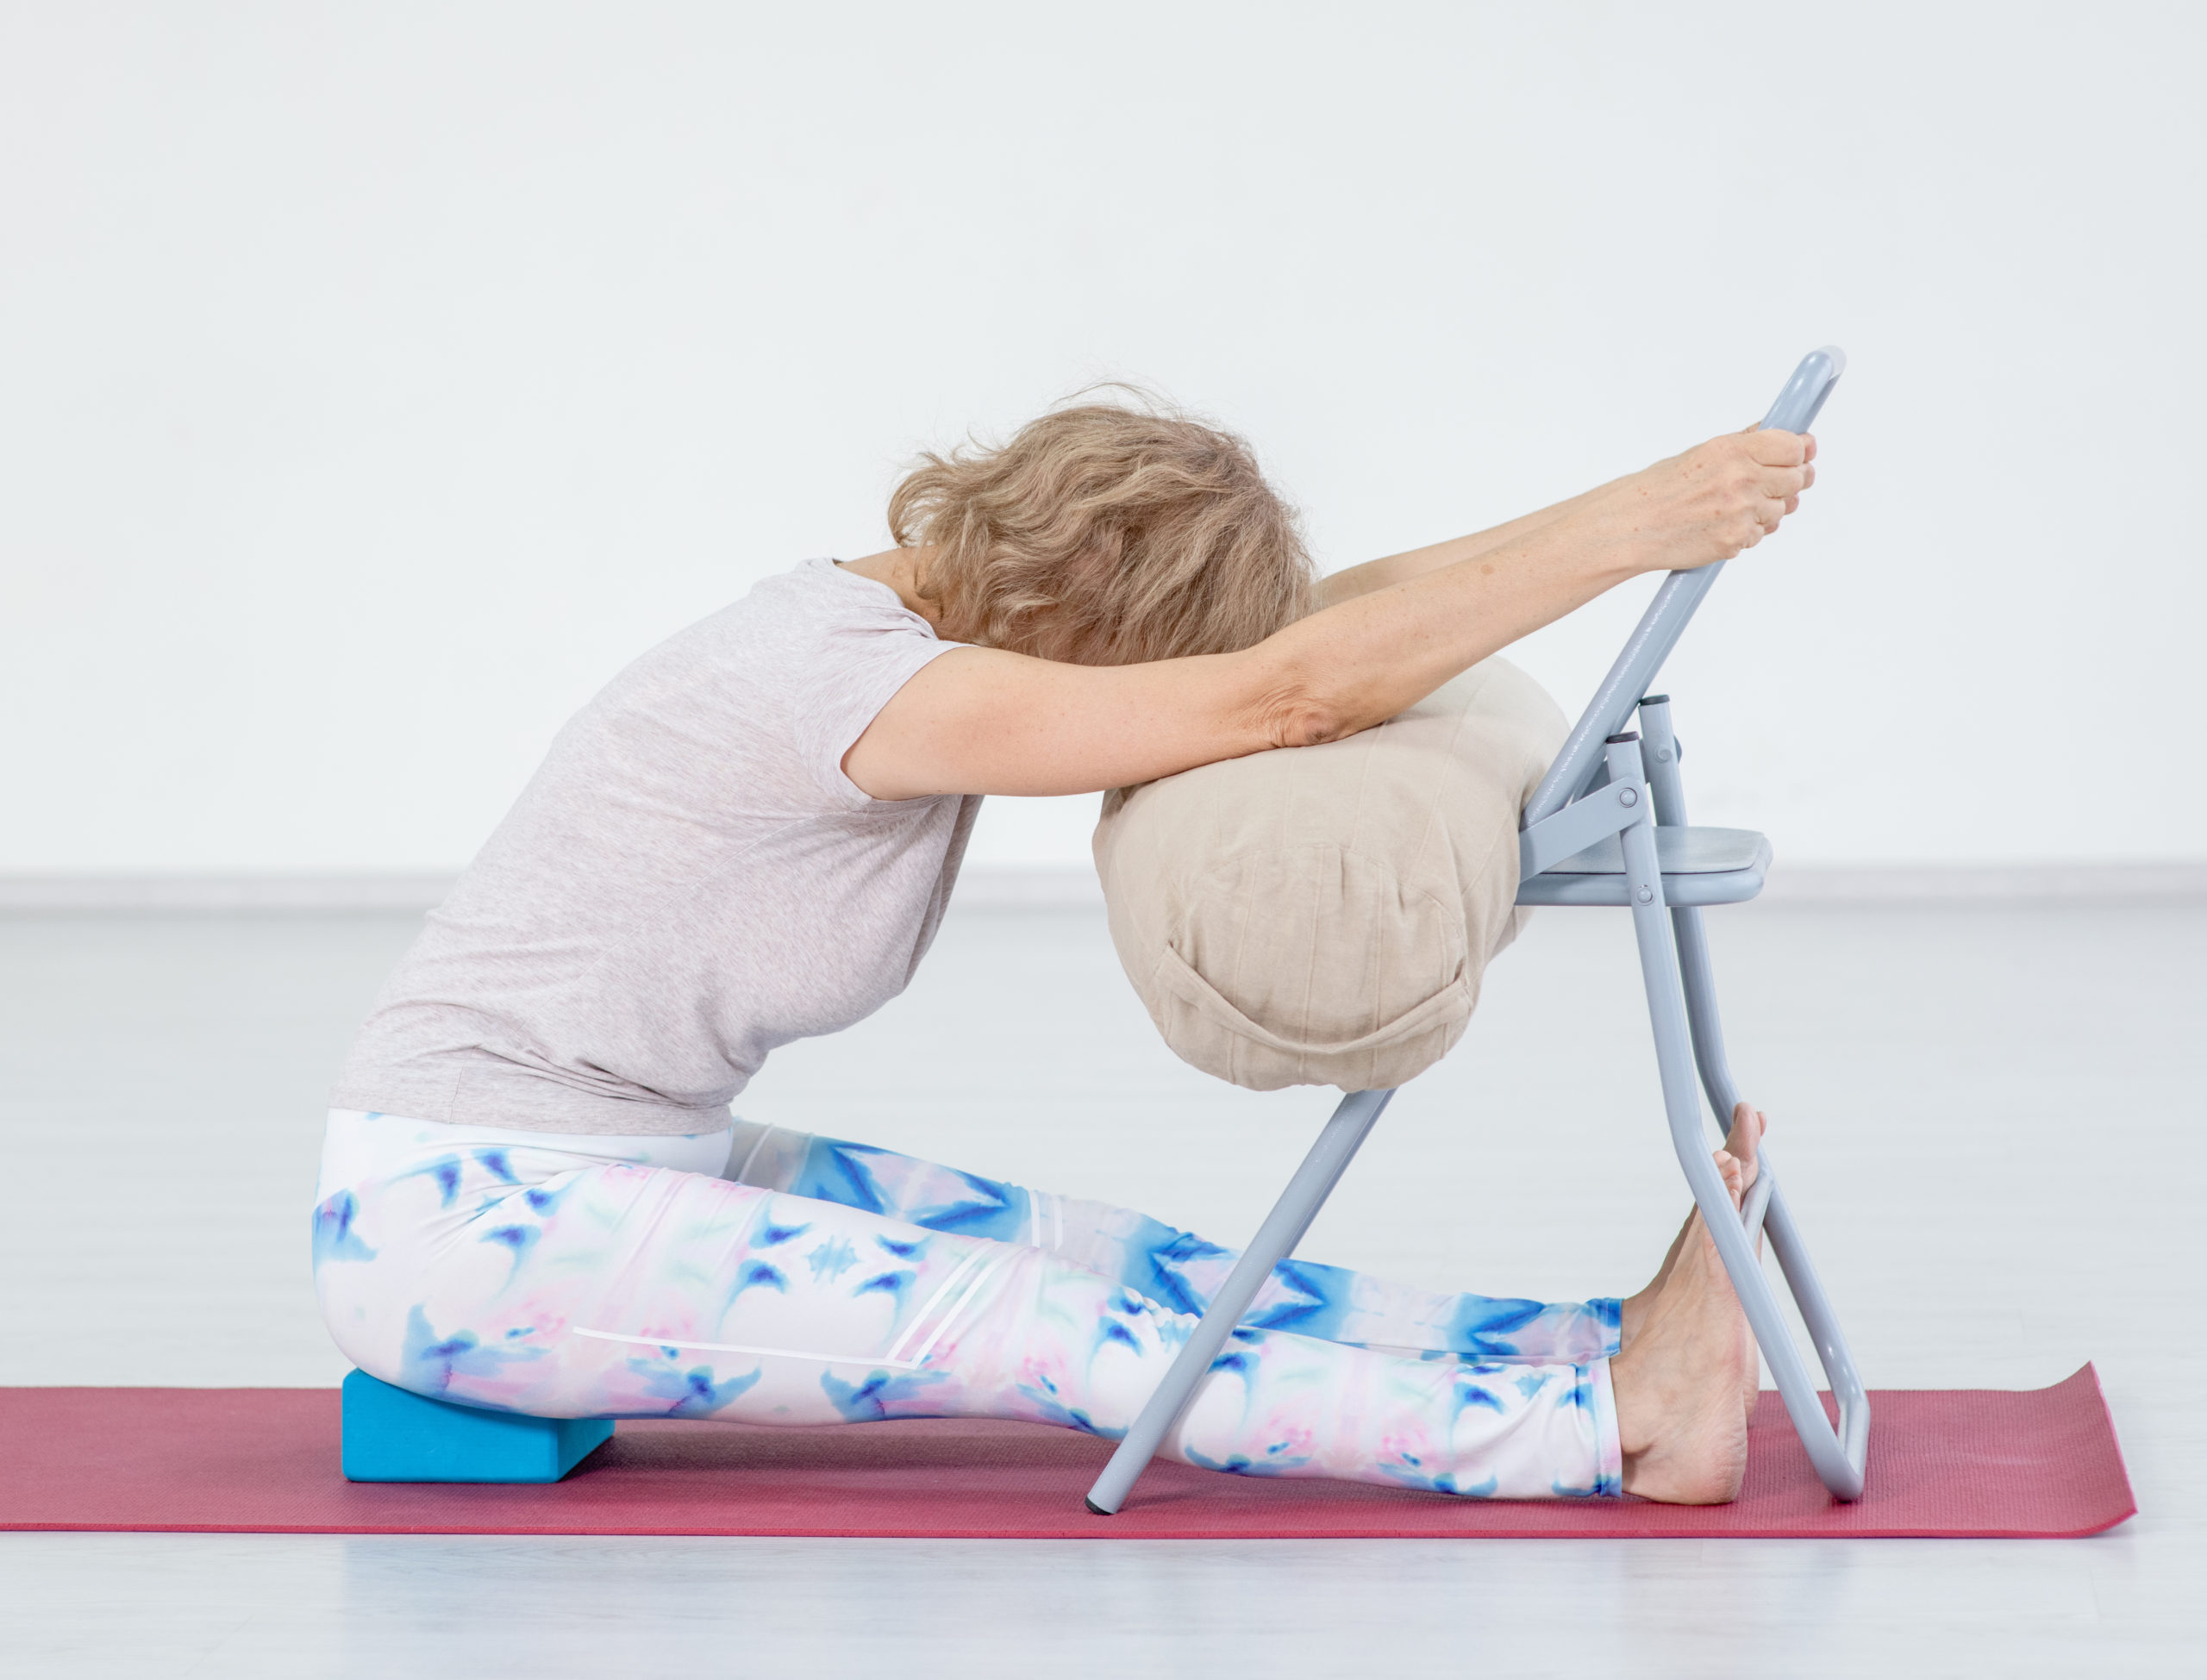 Chair Yoga pose. Utkatasana. Elderly woman practicing yoga asana. Healthy  lifestyle. Flat cartoon character. Vector illustration 29193948 Vector Art  at Vecteezy